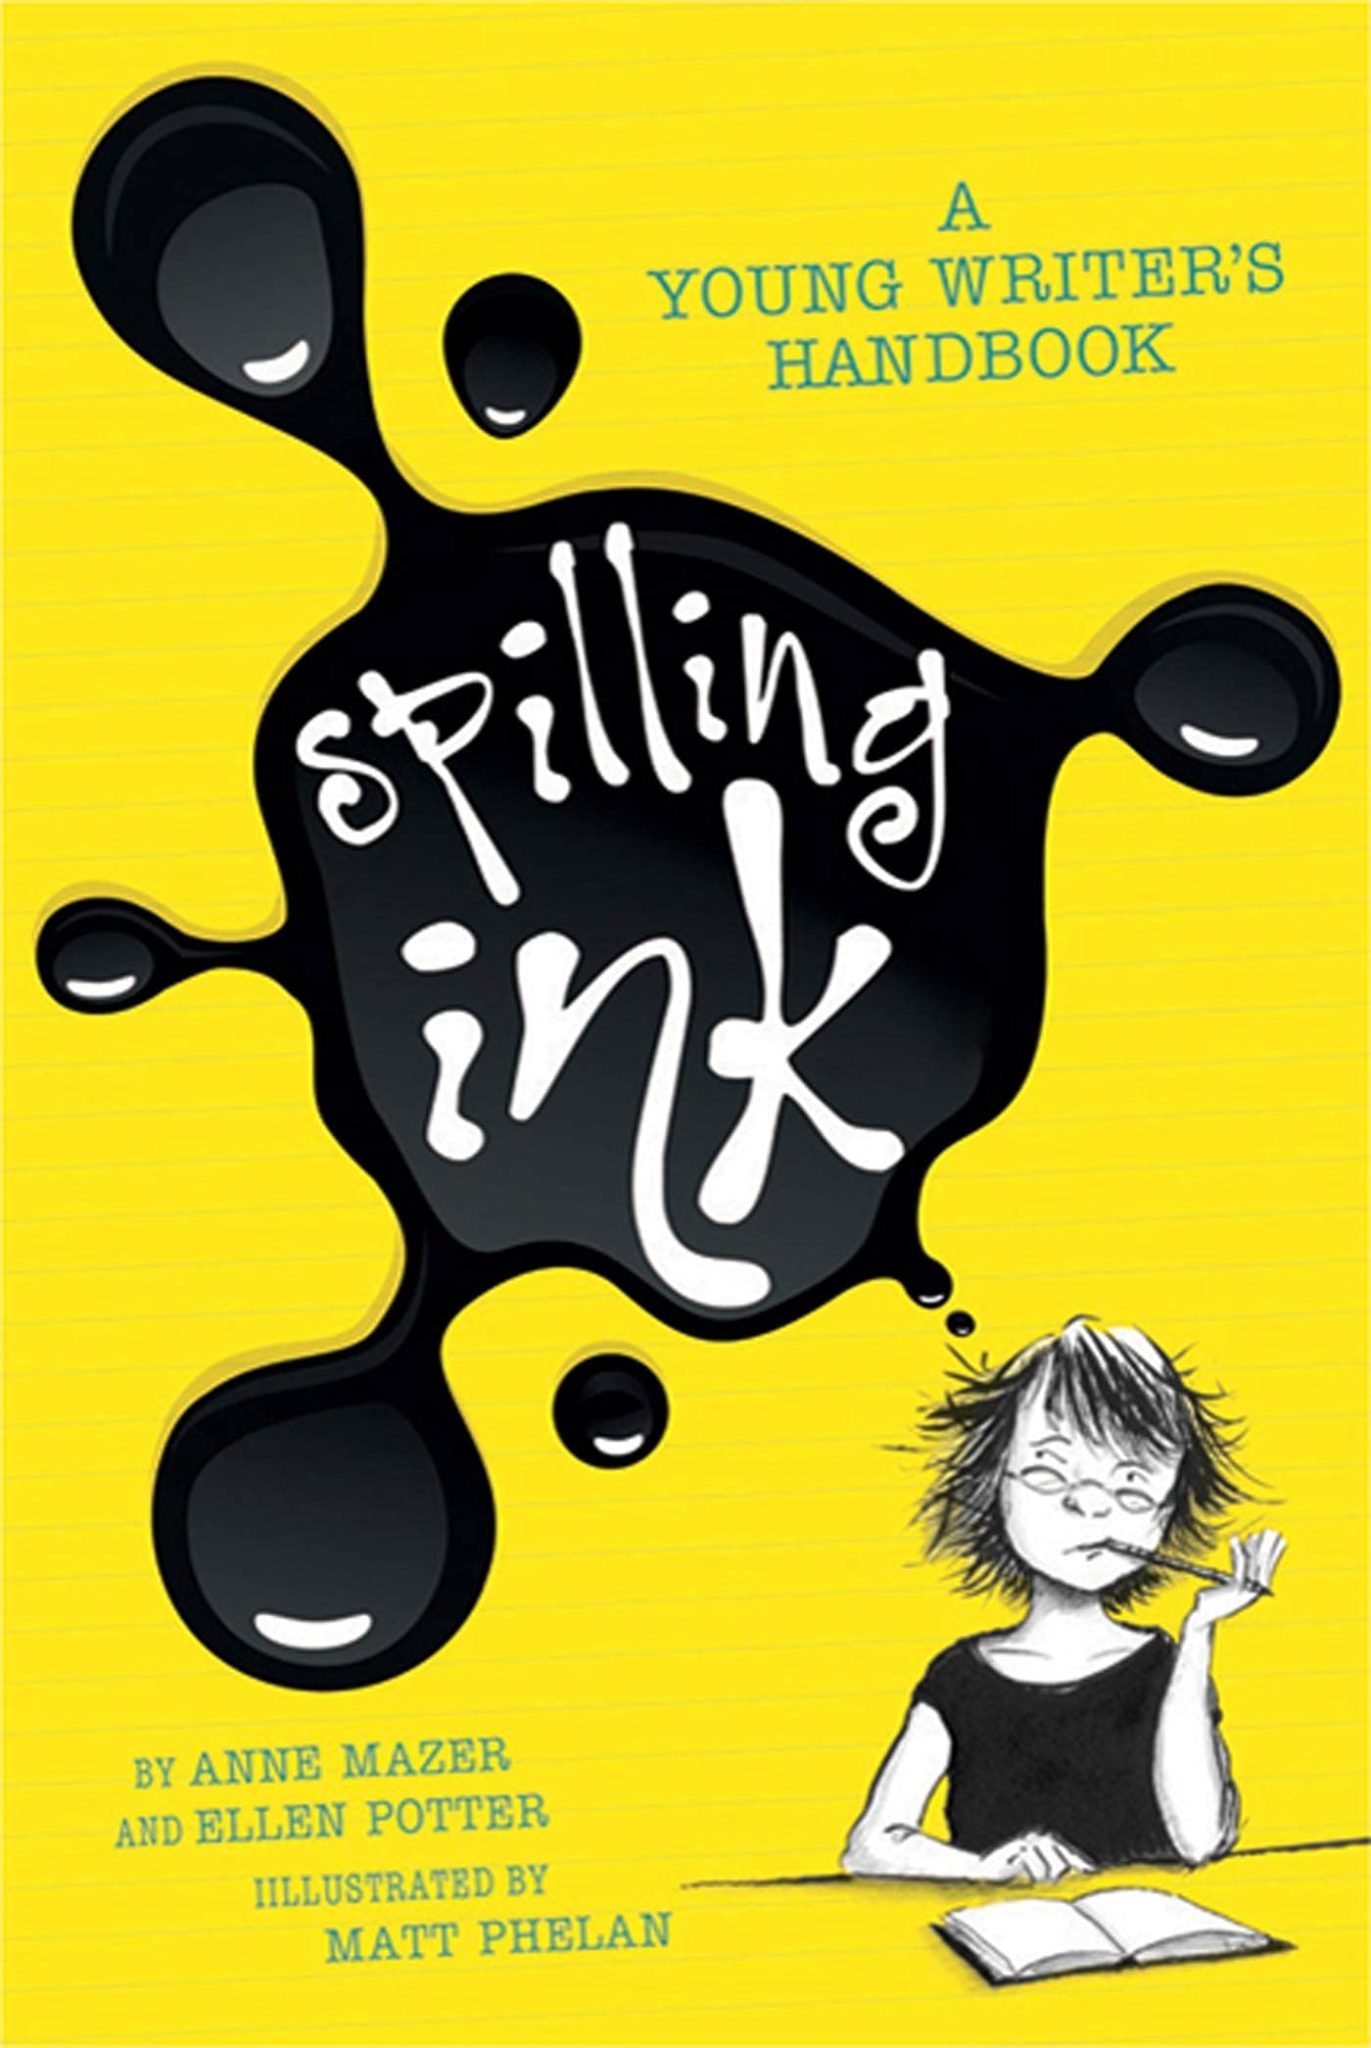 "Spilling Ink" by Anne Mazer and Ellen Potter